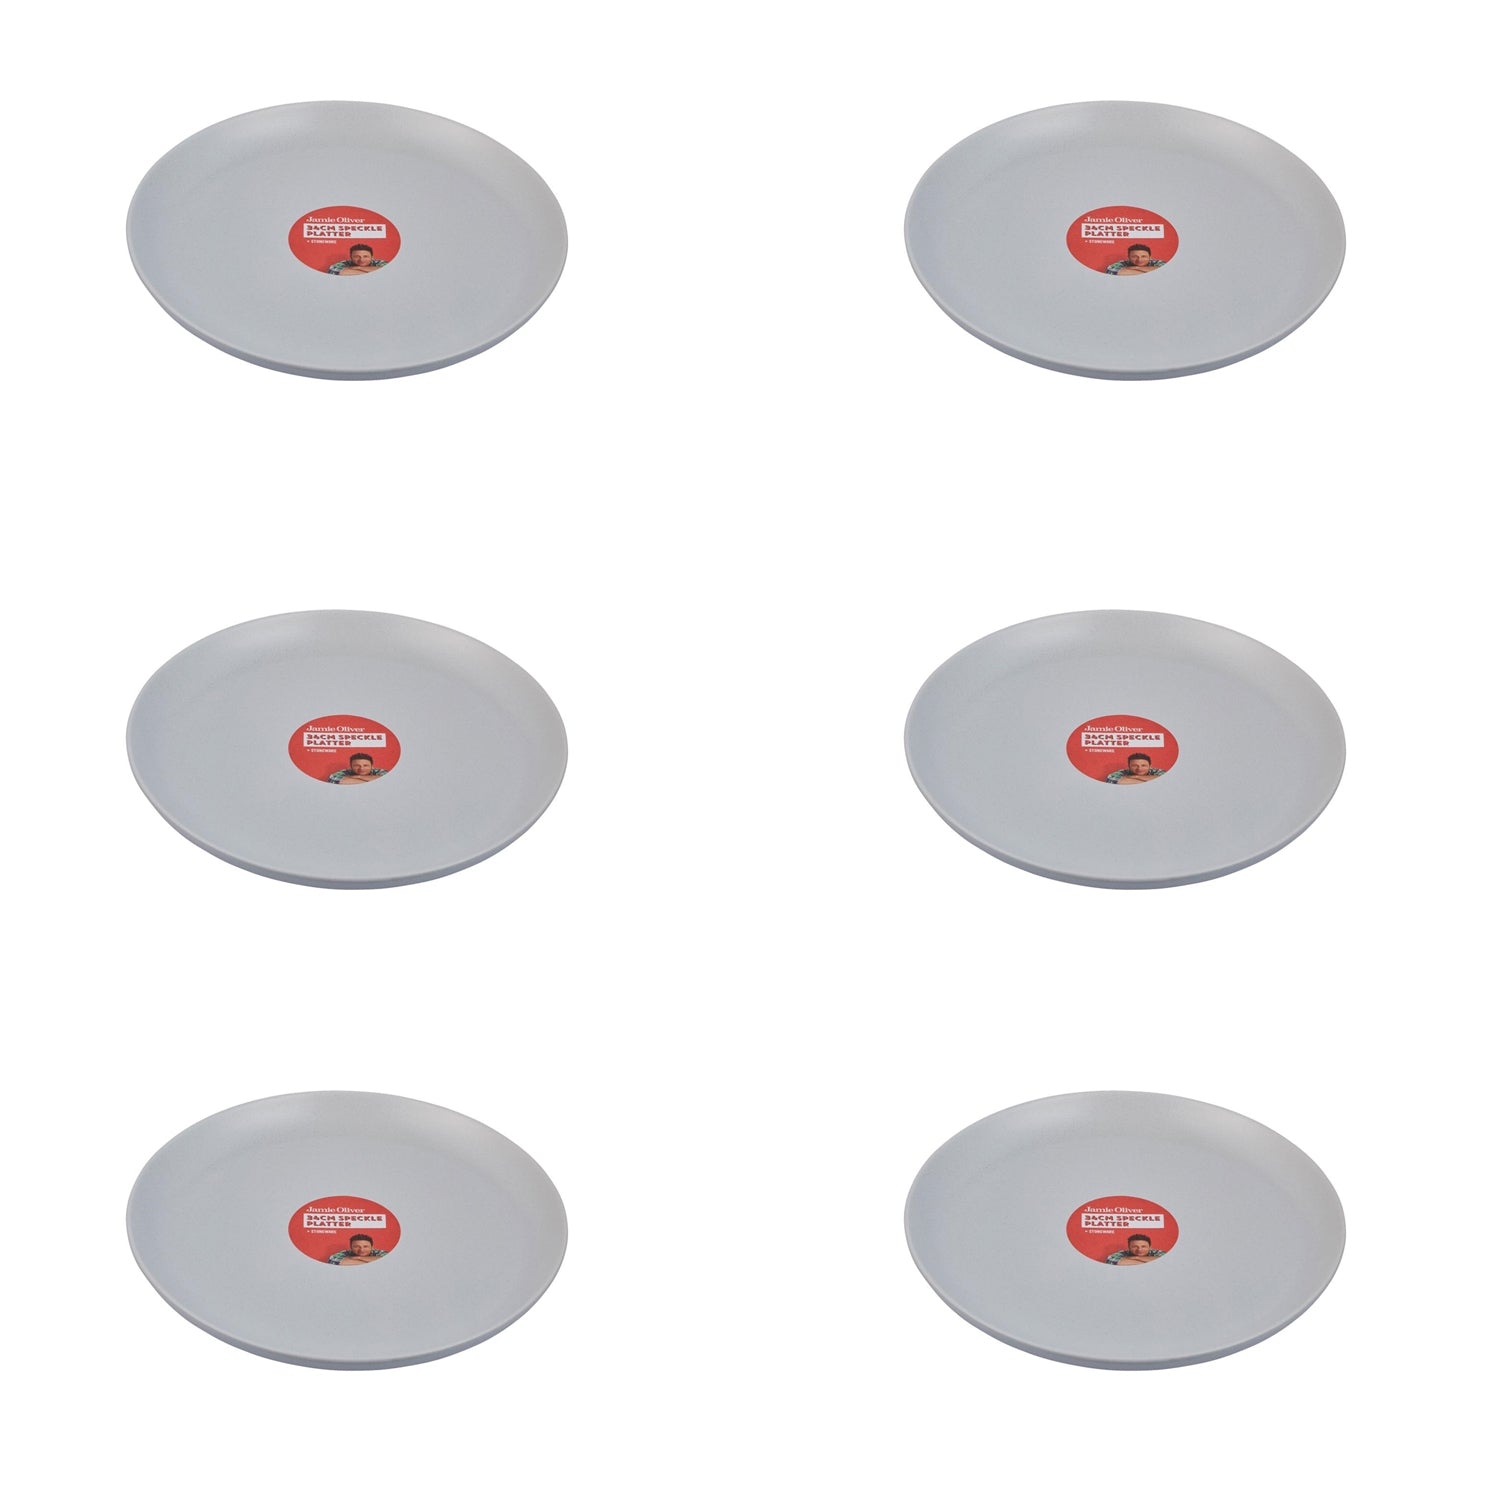 Jamie Oliver Speiseteller 6 Stück Teller Speckle hellgrau 34 cm Essteller Dinner Plates